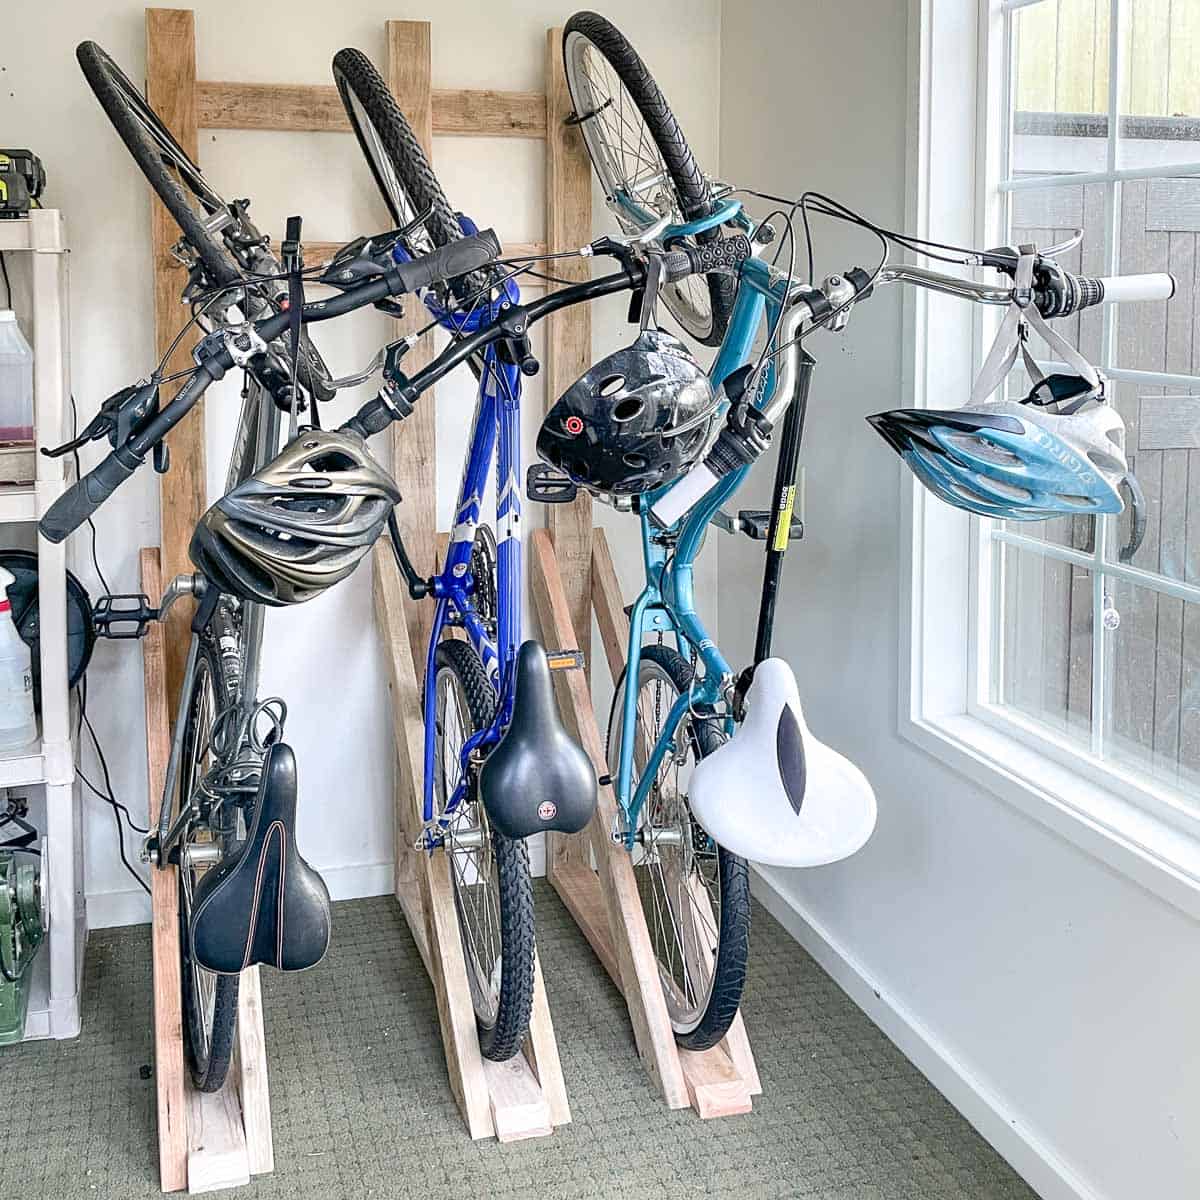 DIY garage bike rack on the wall